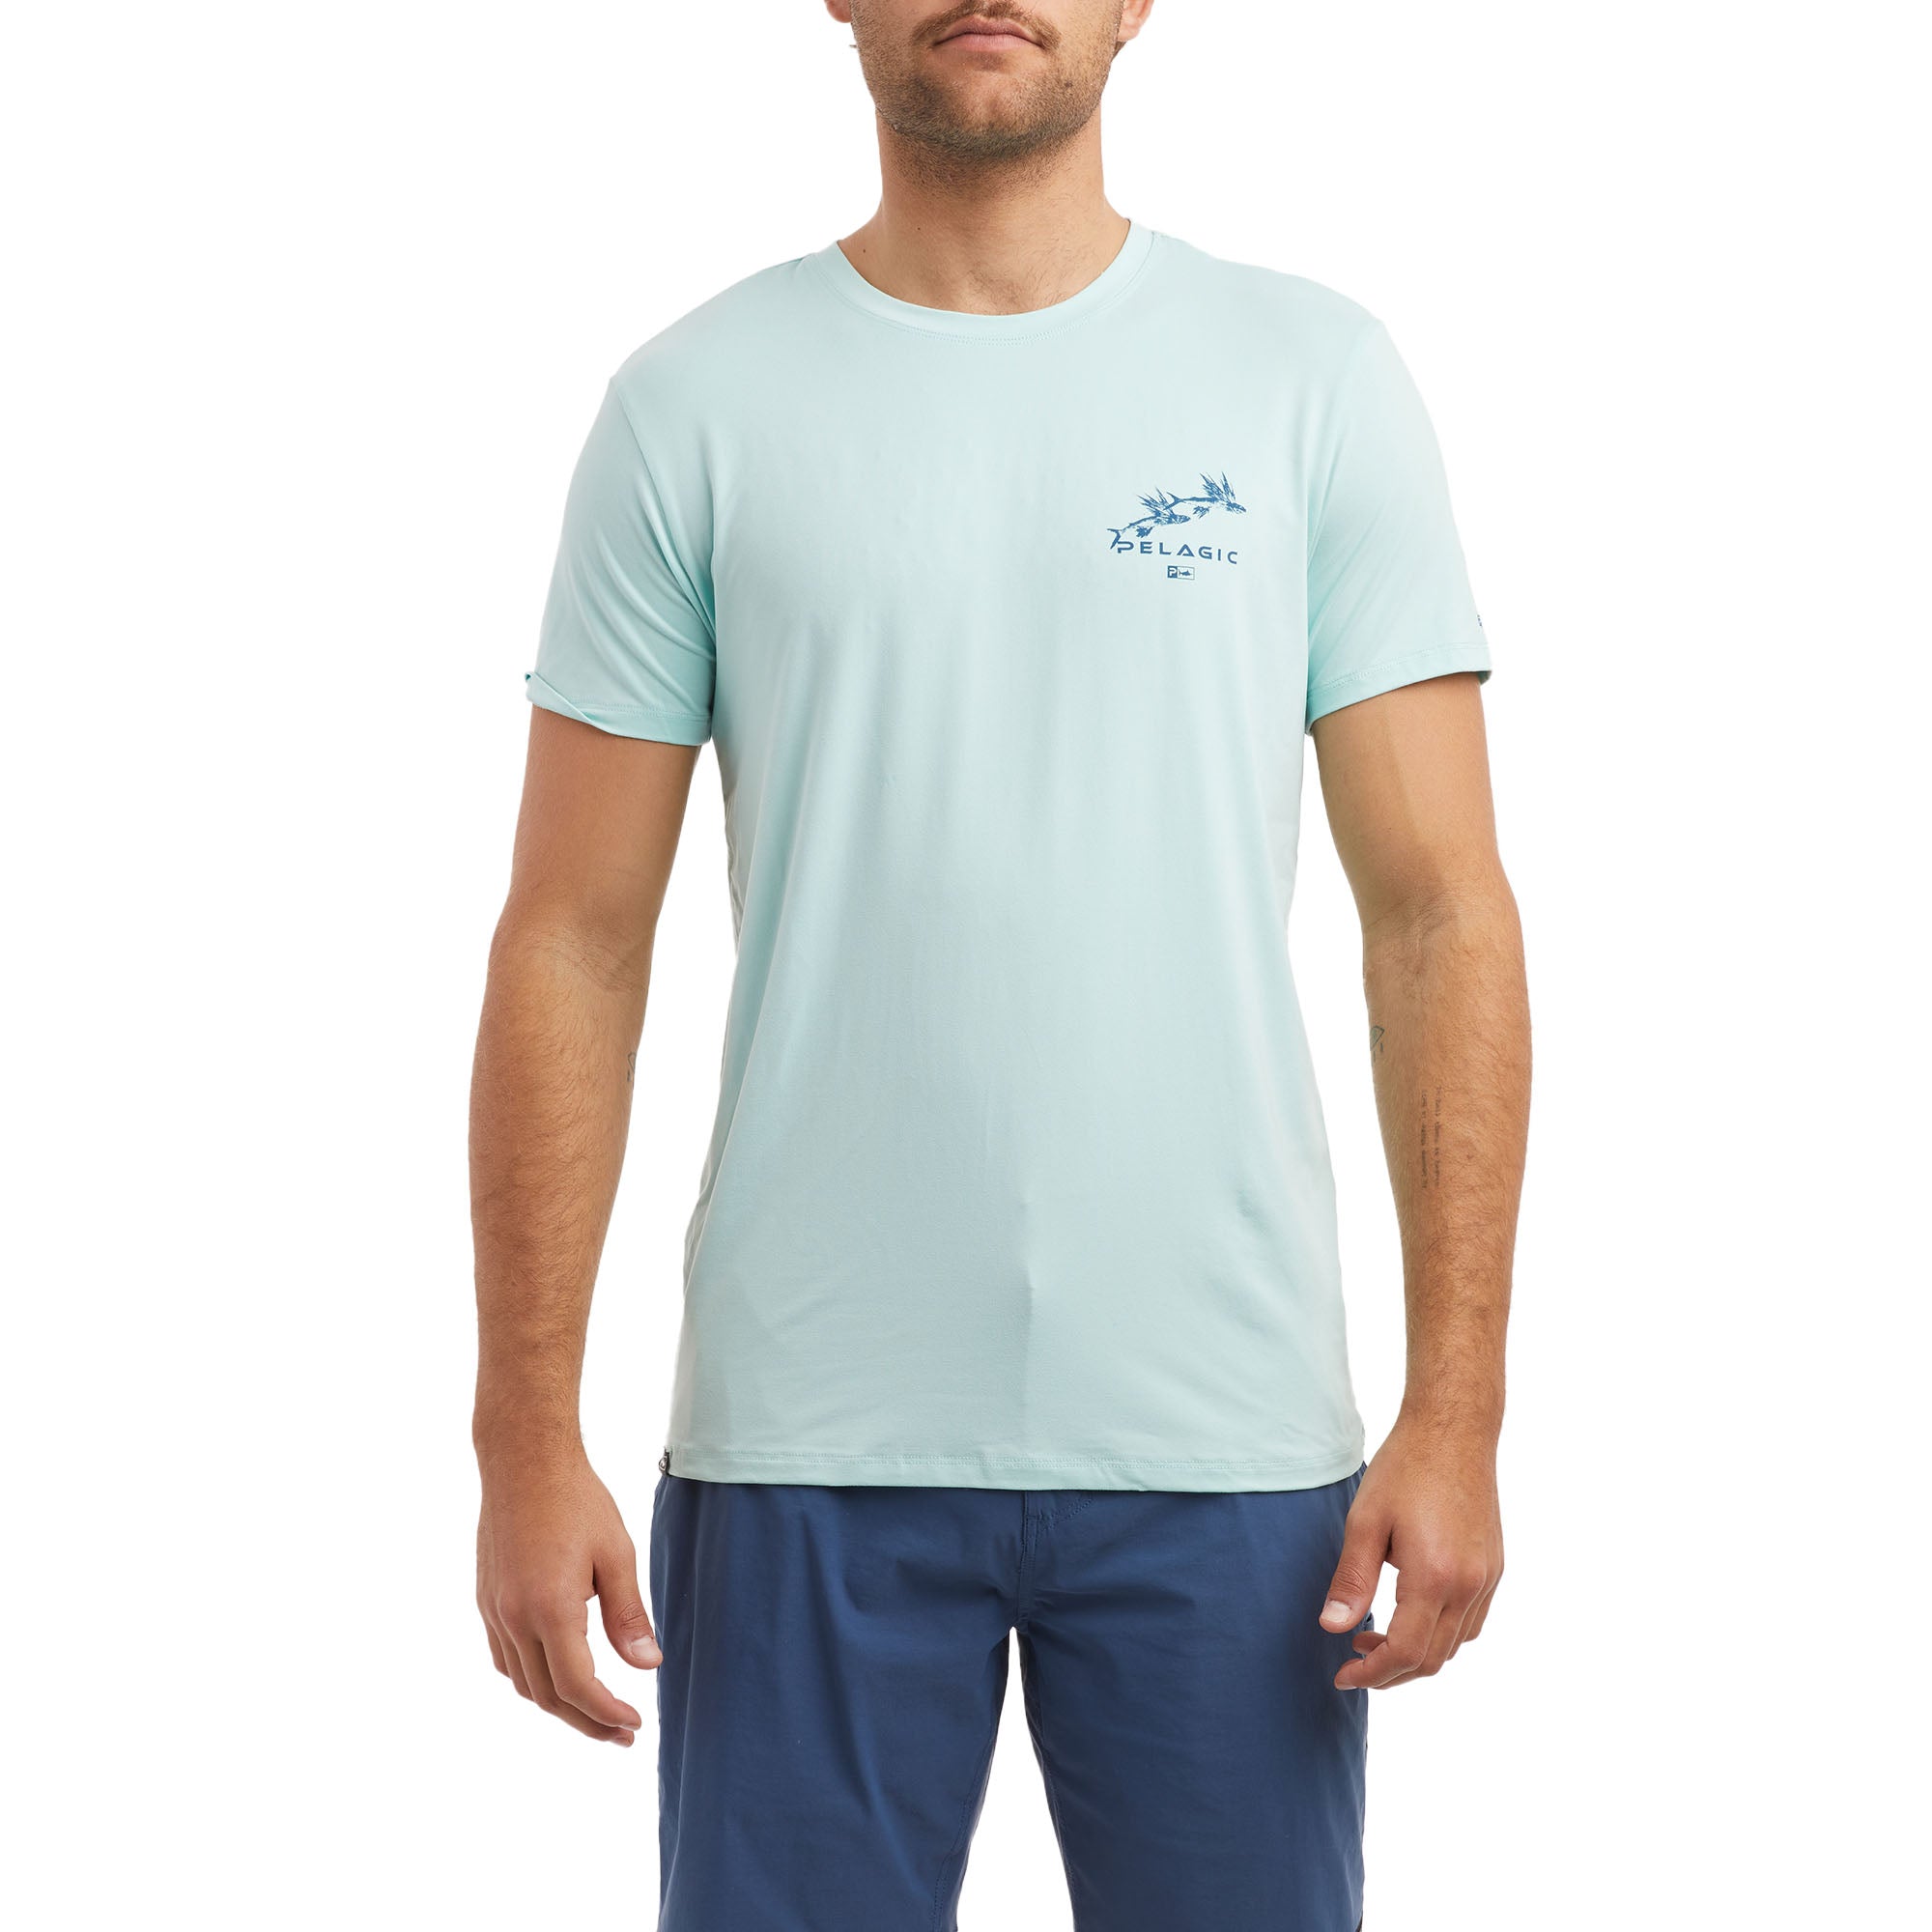 Stratos Gyotaku Marlin Performance Shirt | PELAGIC Fishing Gear